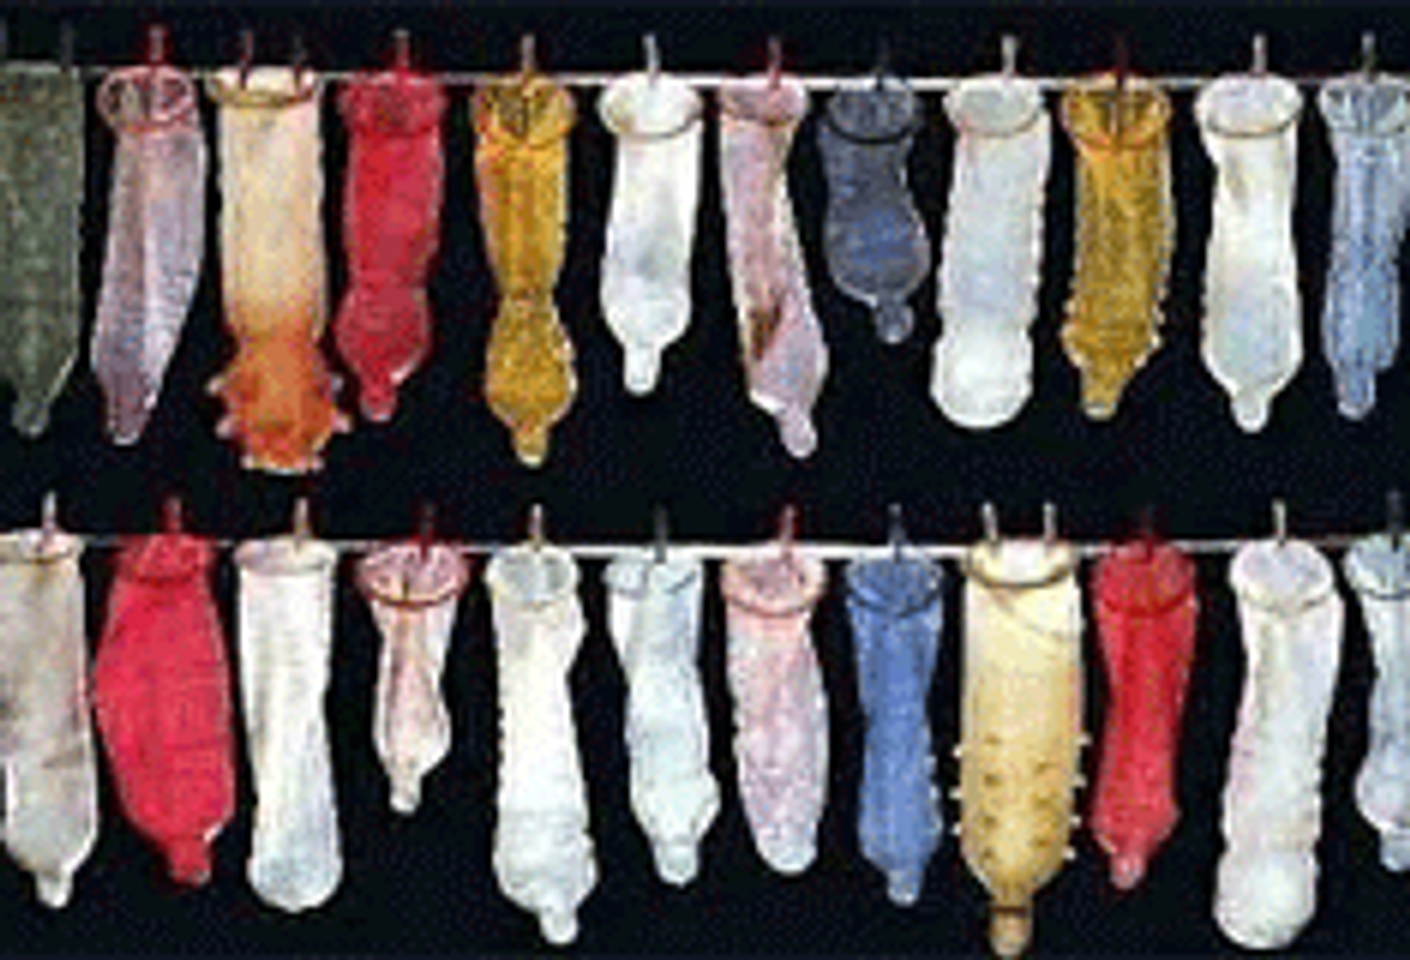 Sex Educators to Launch Spray-on Condom